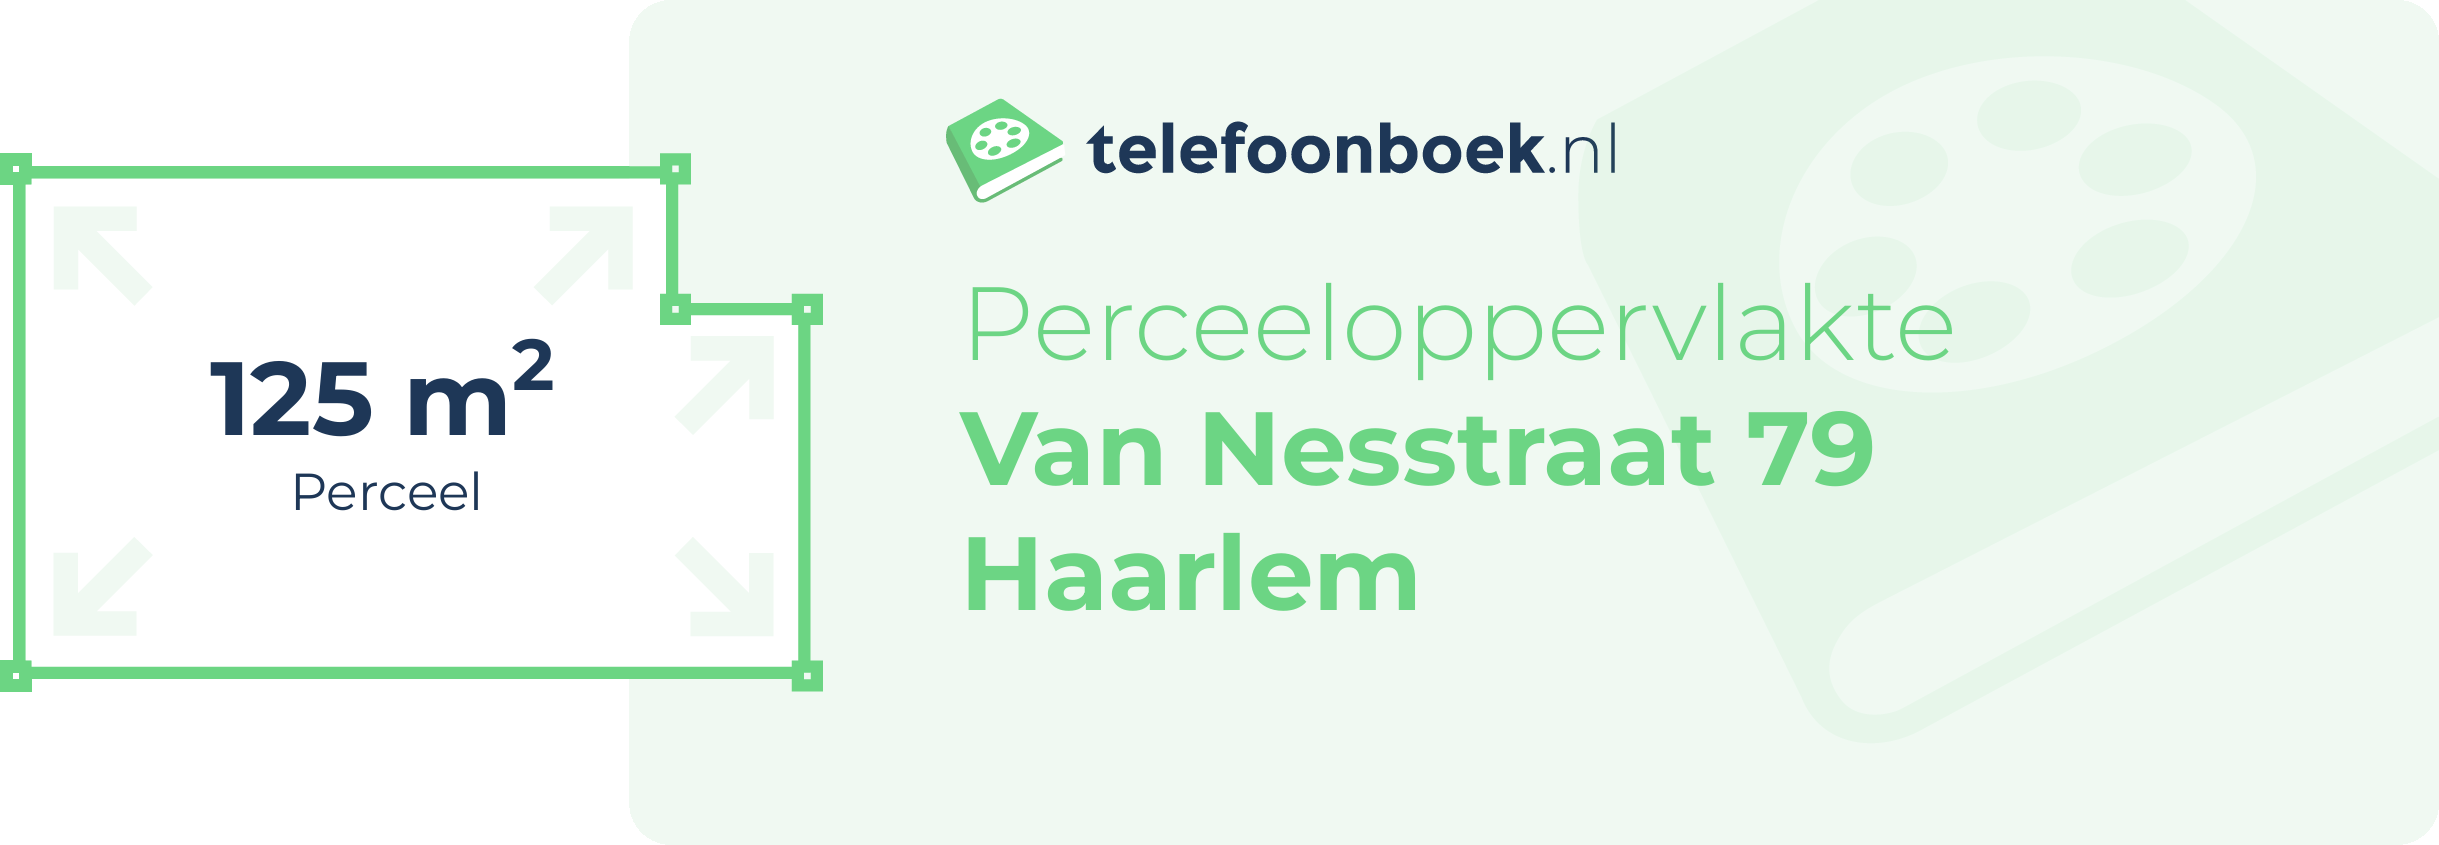 Perceeloppervlakte Van Nesstraat 79 Haarlem